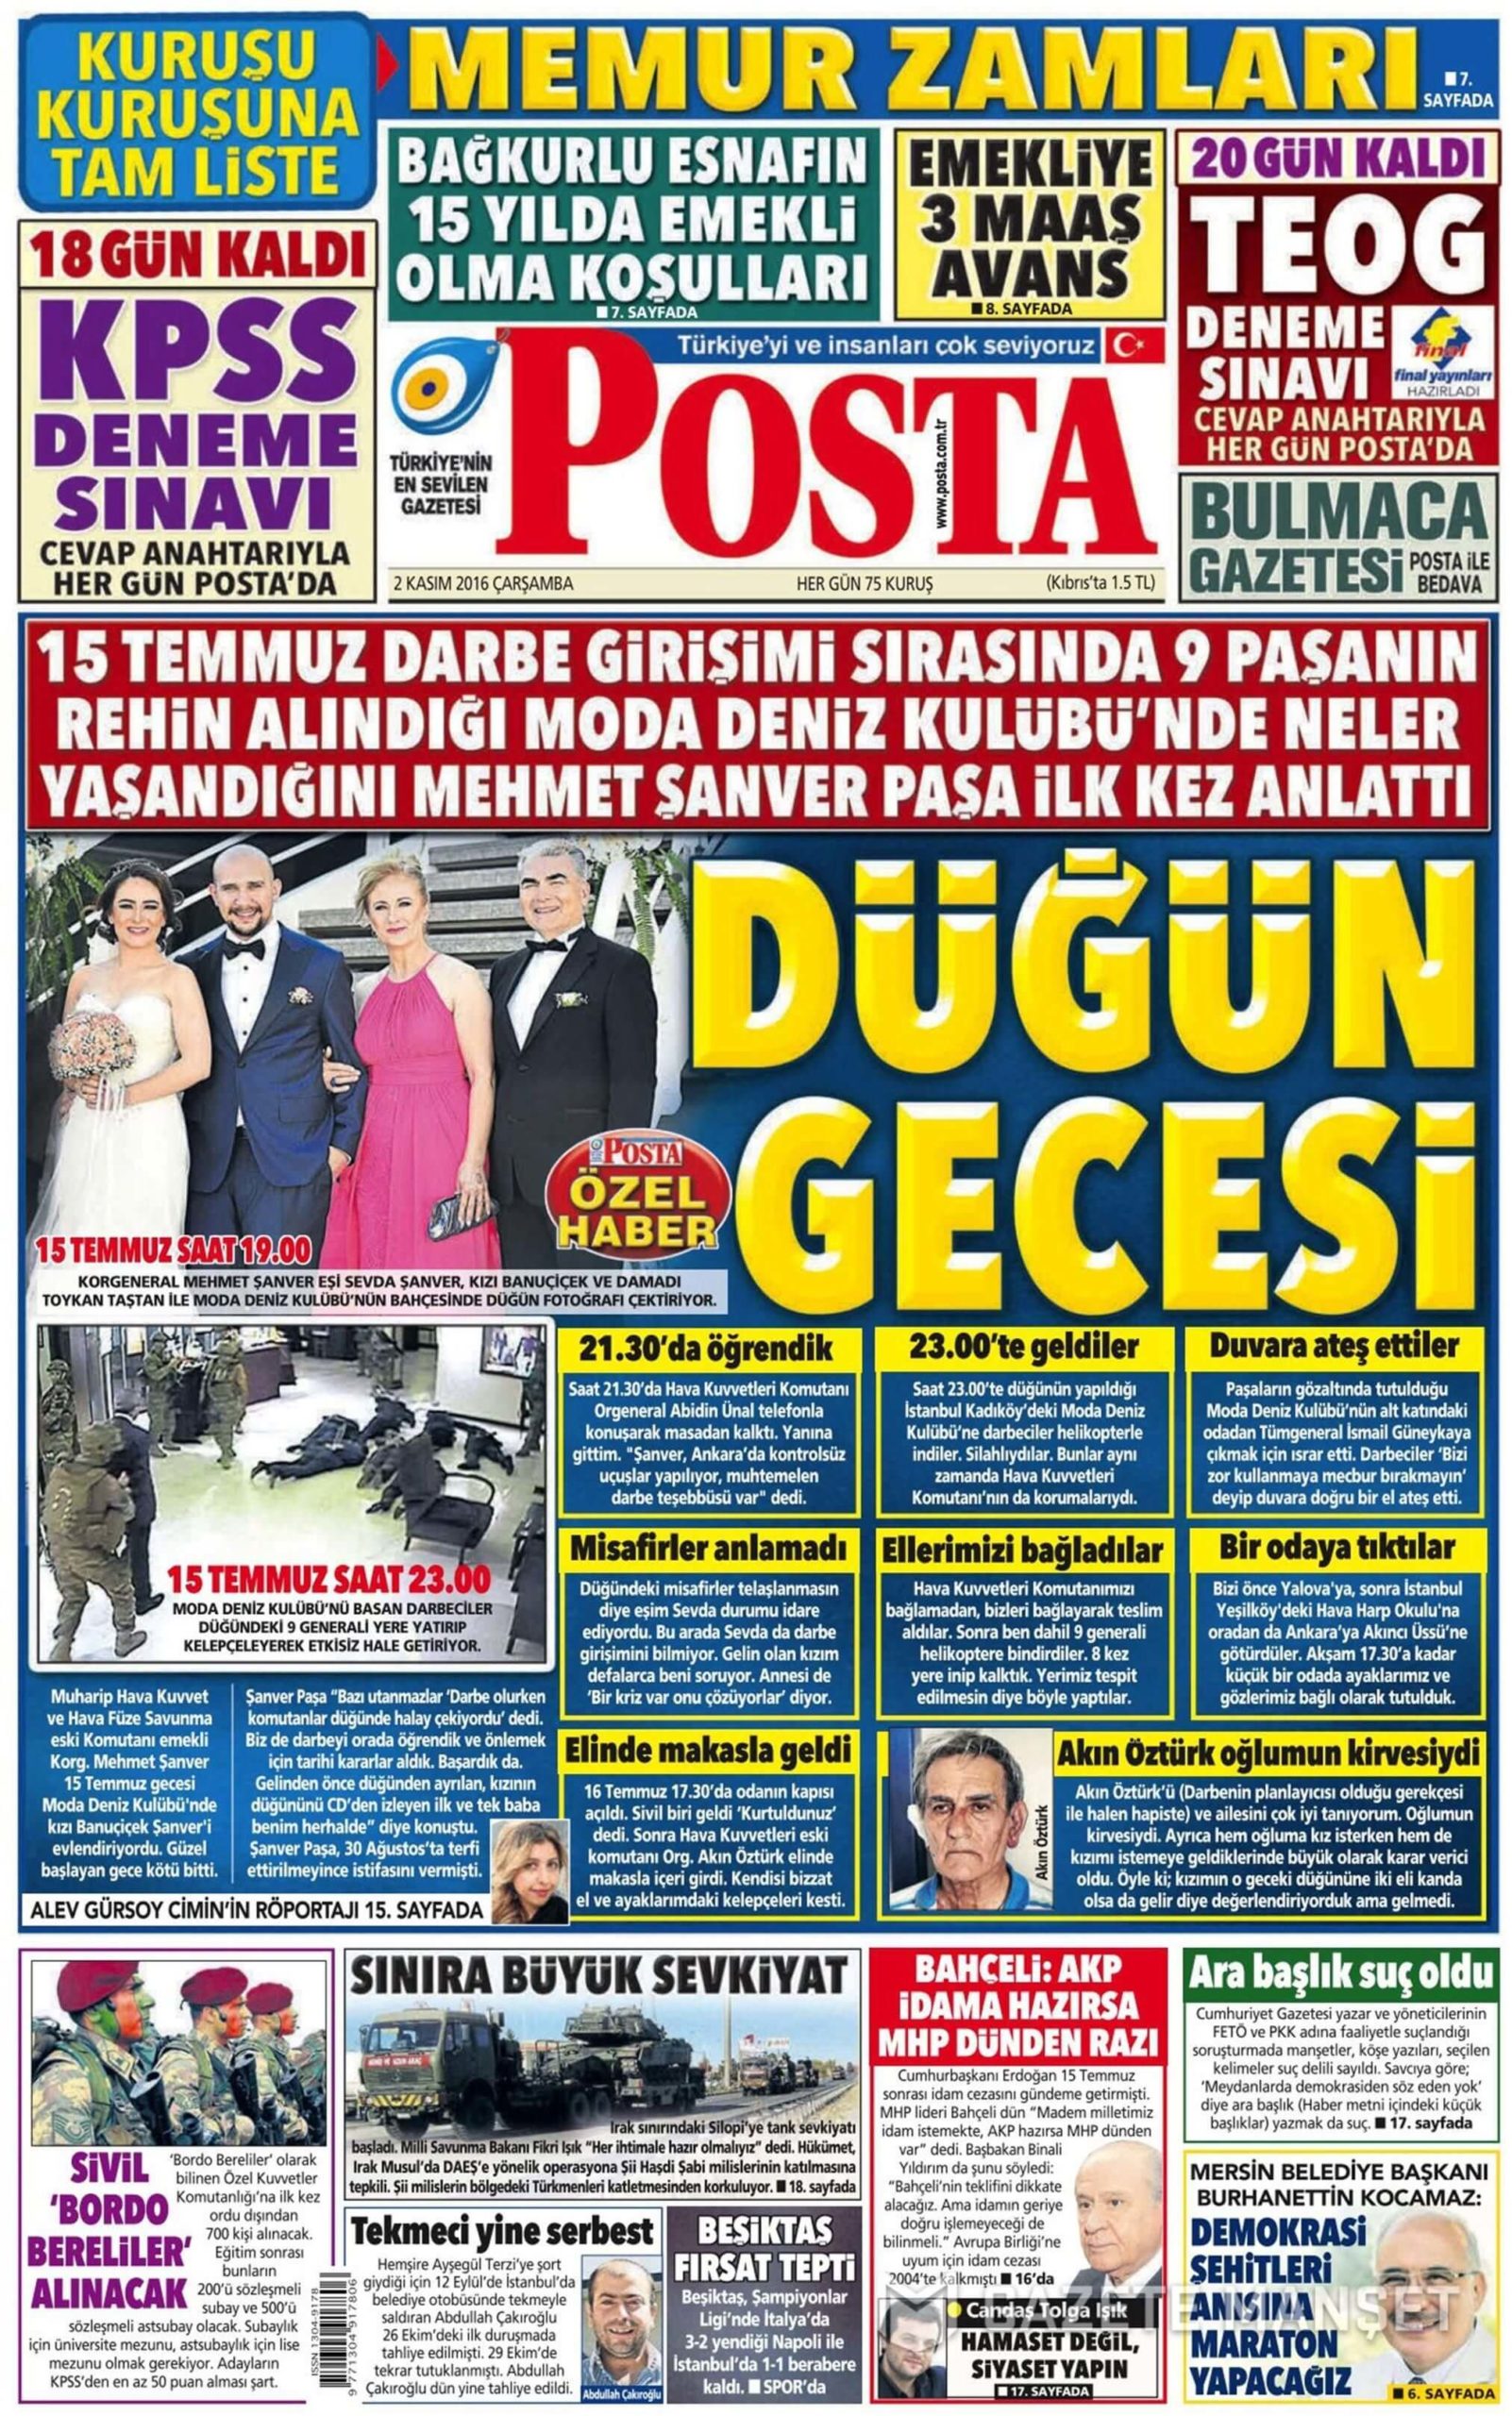 Turkish Newspapers 4 Posta scaled